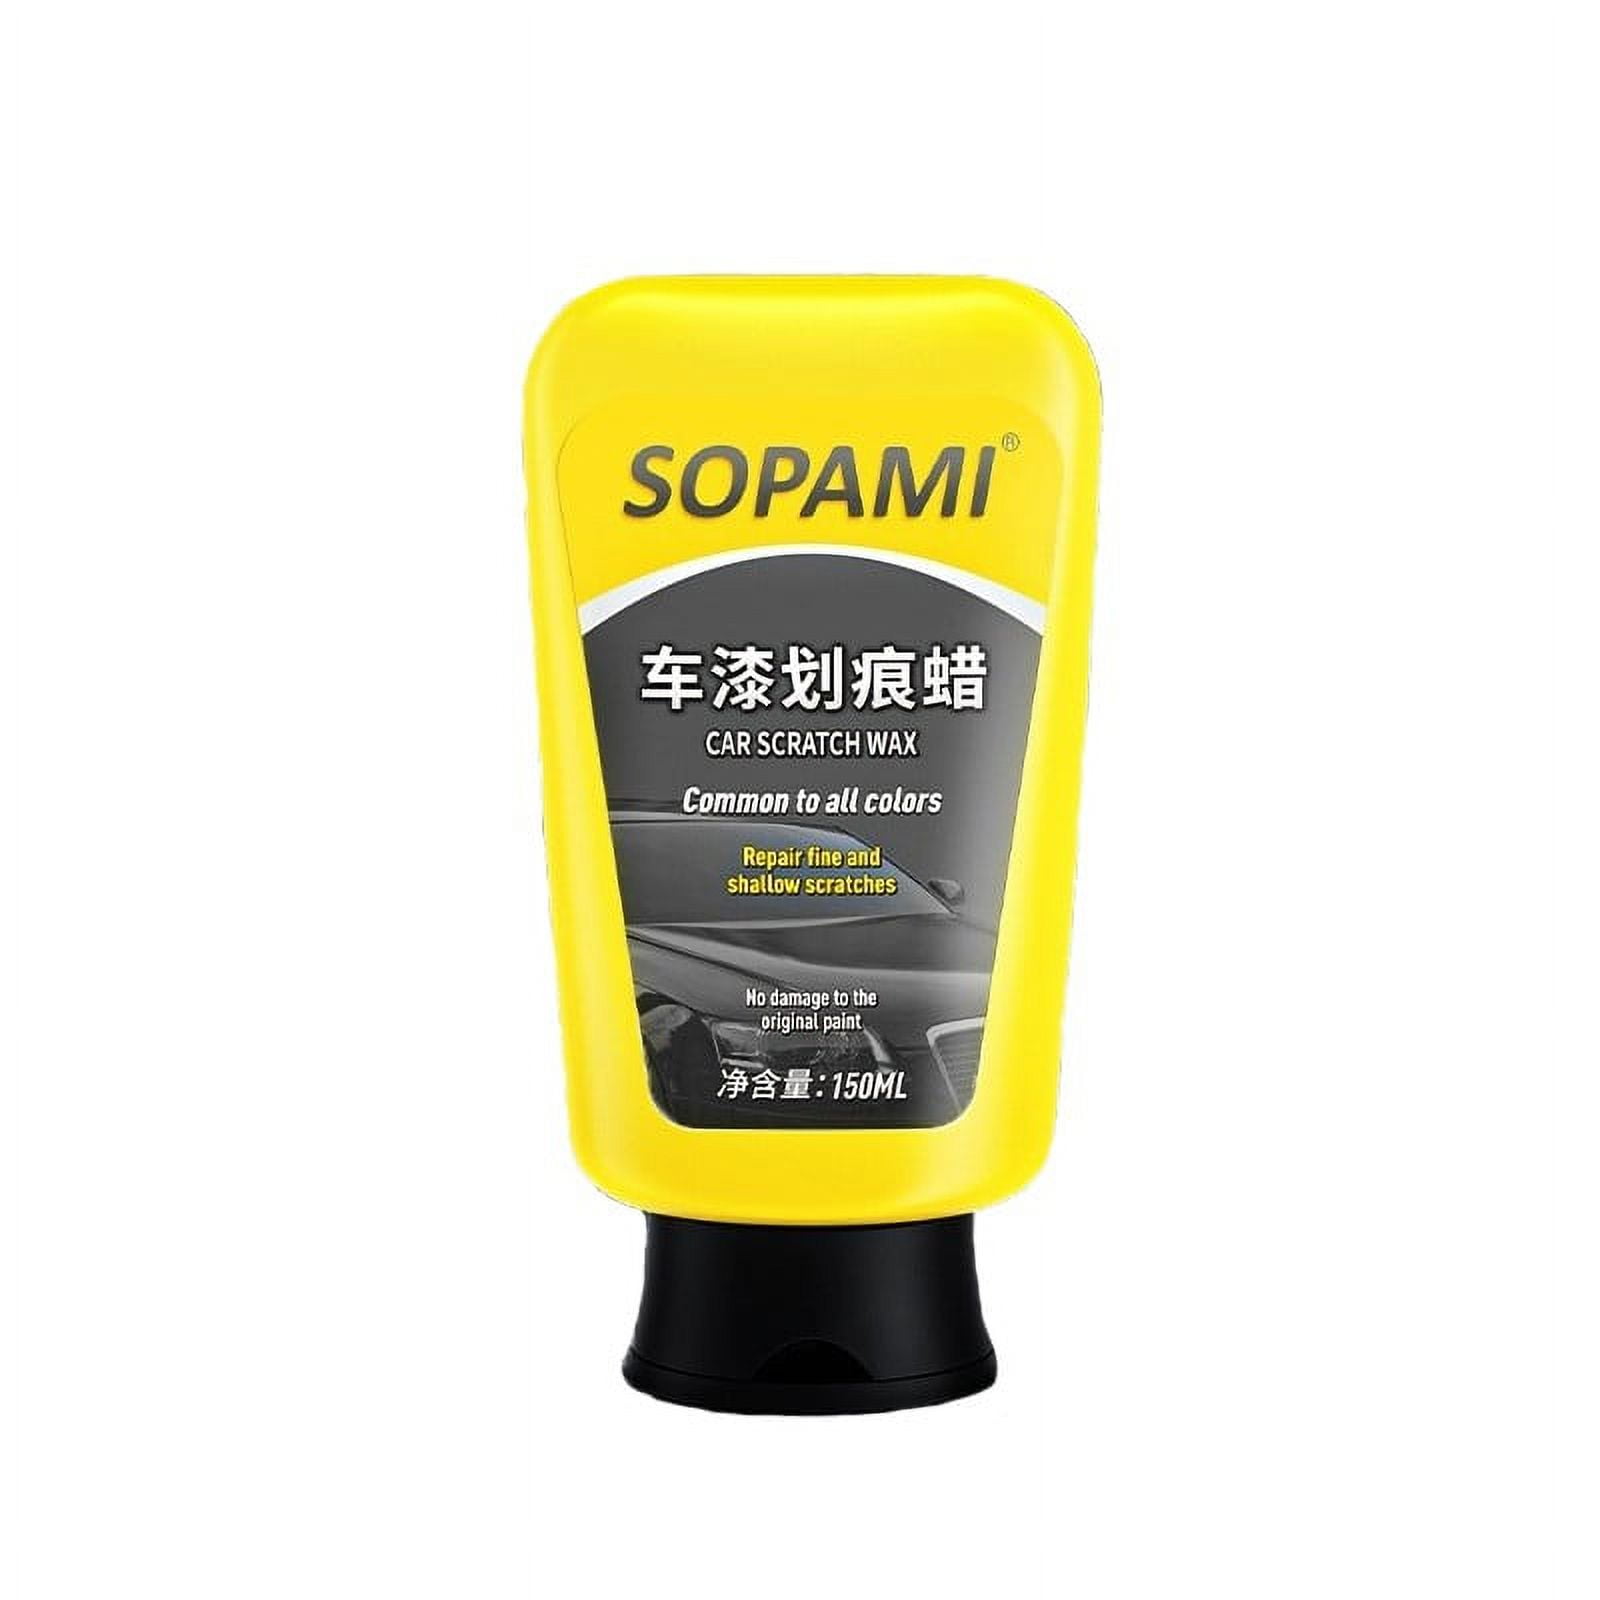 Get your spray coating agent now #sopami #tiktokshop